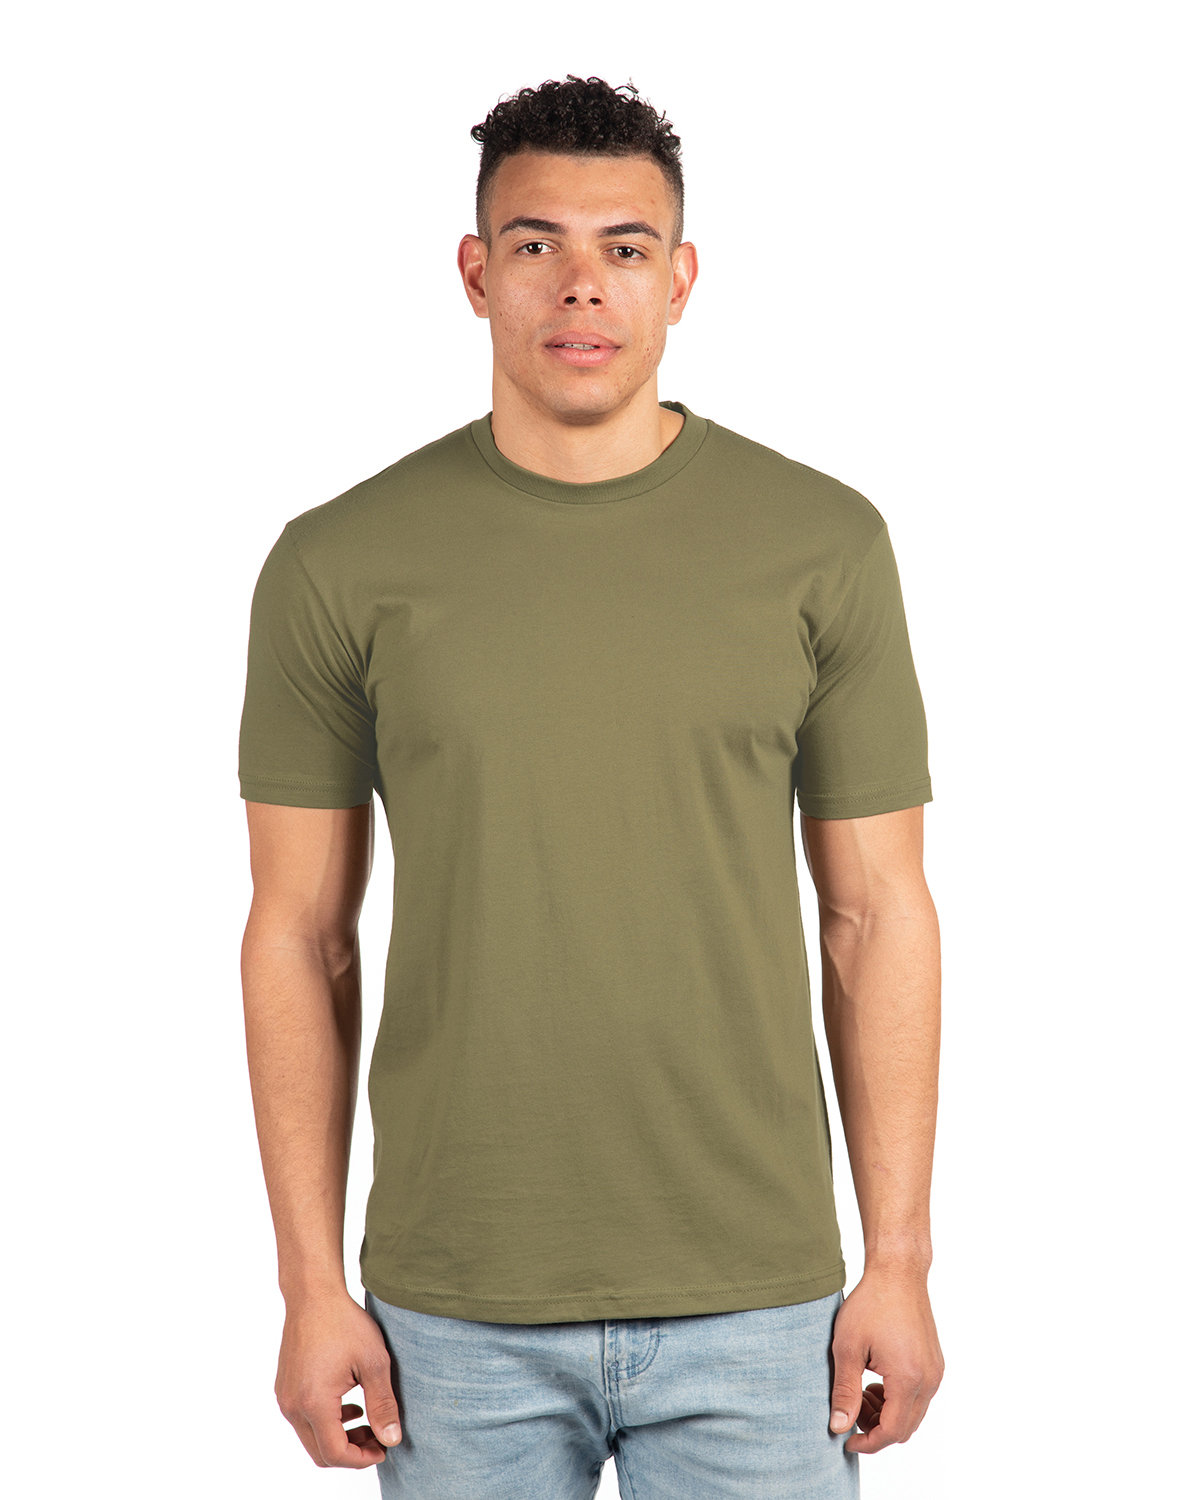 Next Level Unisex Cotton T-Shirt | alphabroder Canada